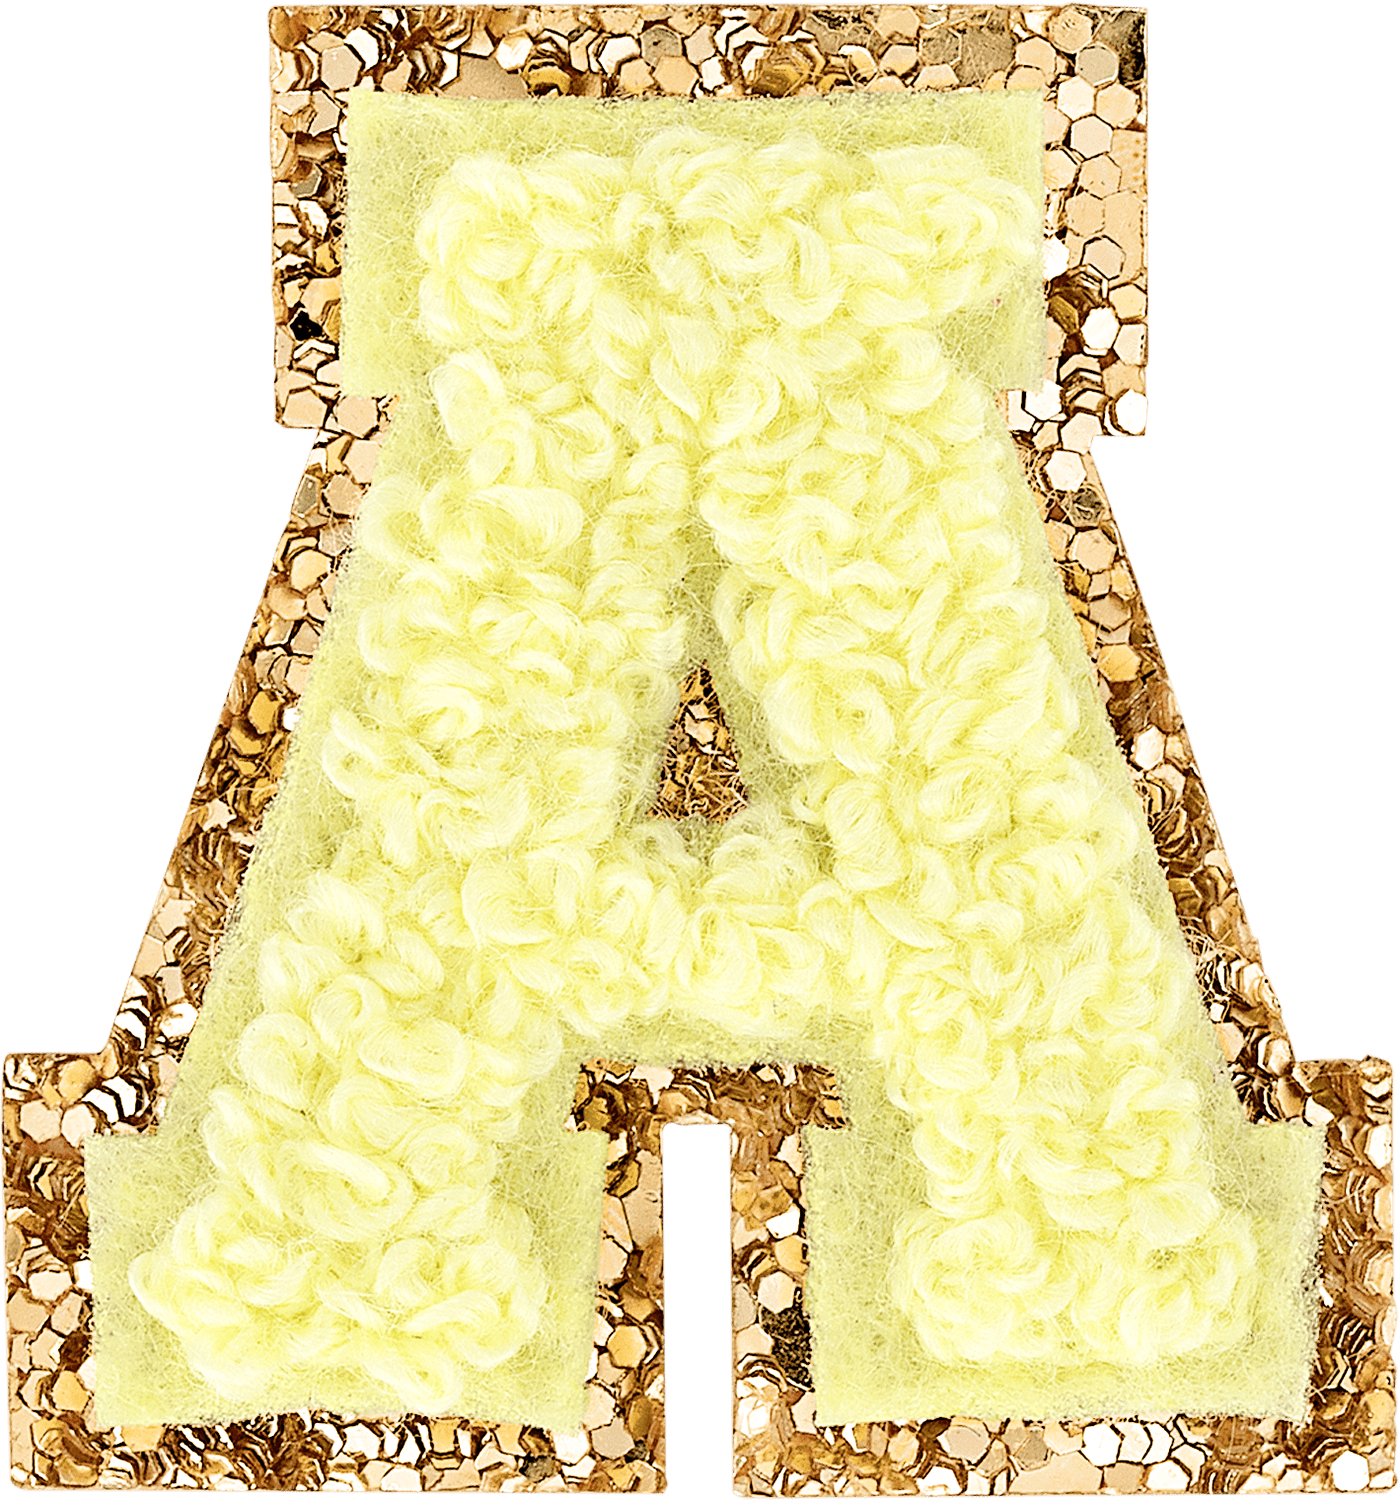 Stoney Clover Lane Blanc Glitter Varsity Letter Patch – mitylene